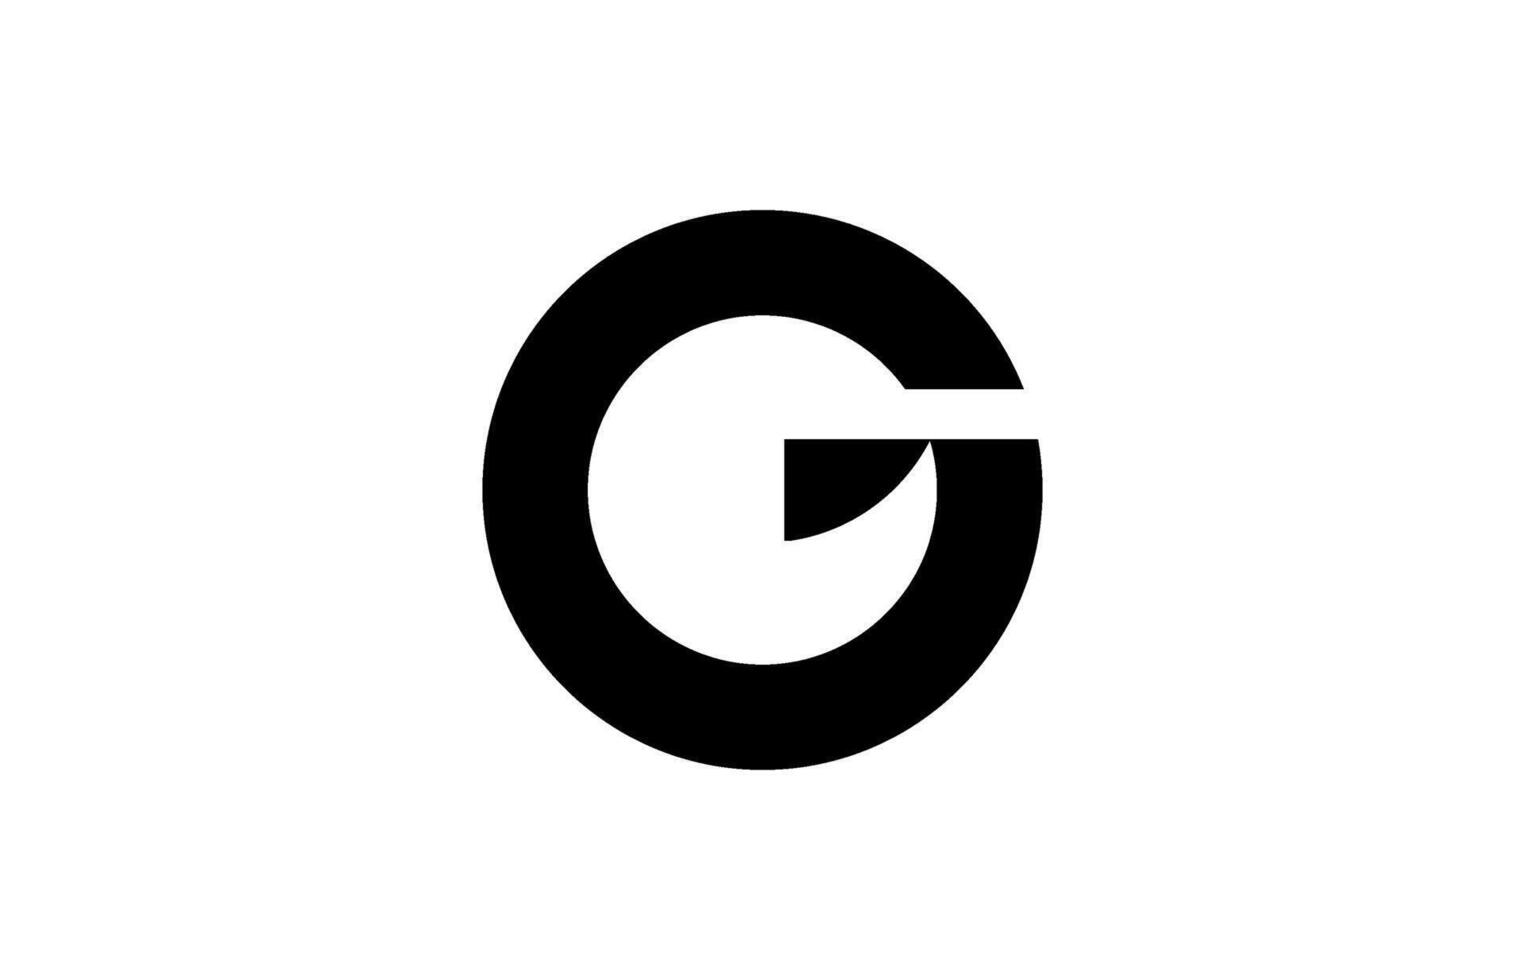 G asphalt logo design inspiration. Vector letter template design for brand. Creative blue letter IG i g logo with leading lines and road concept design. Letters with geometric design.